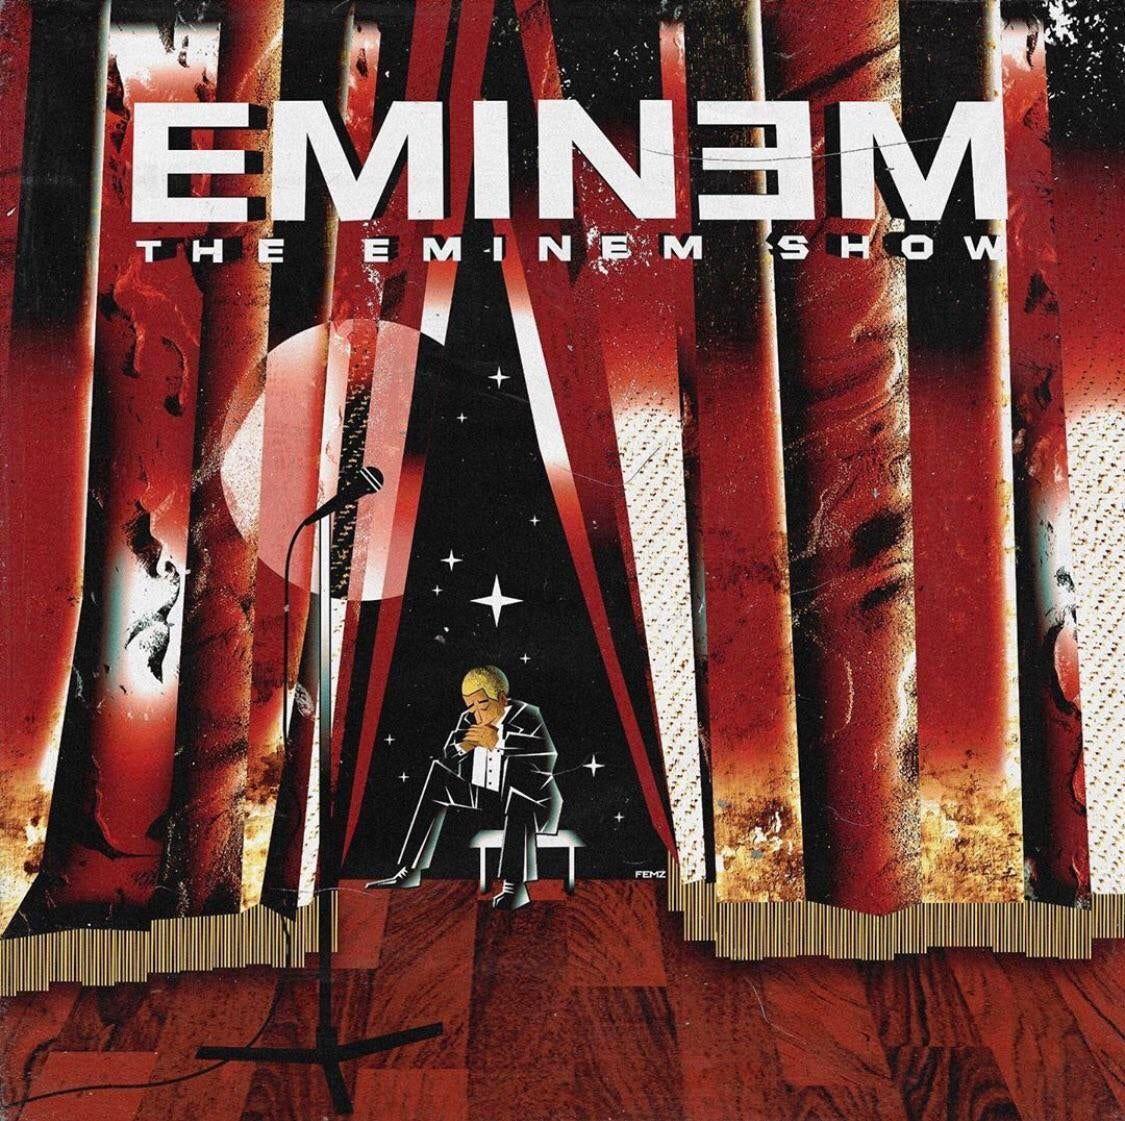 Say Something Negative About This Album R Eminem